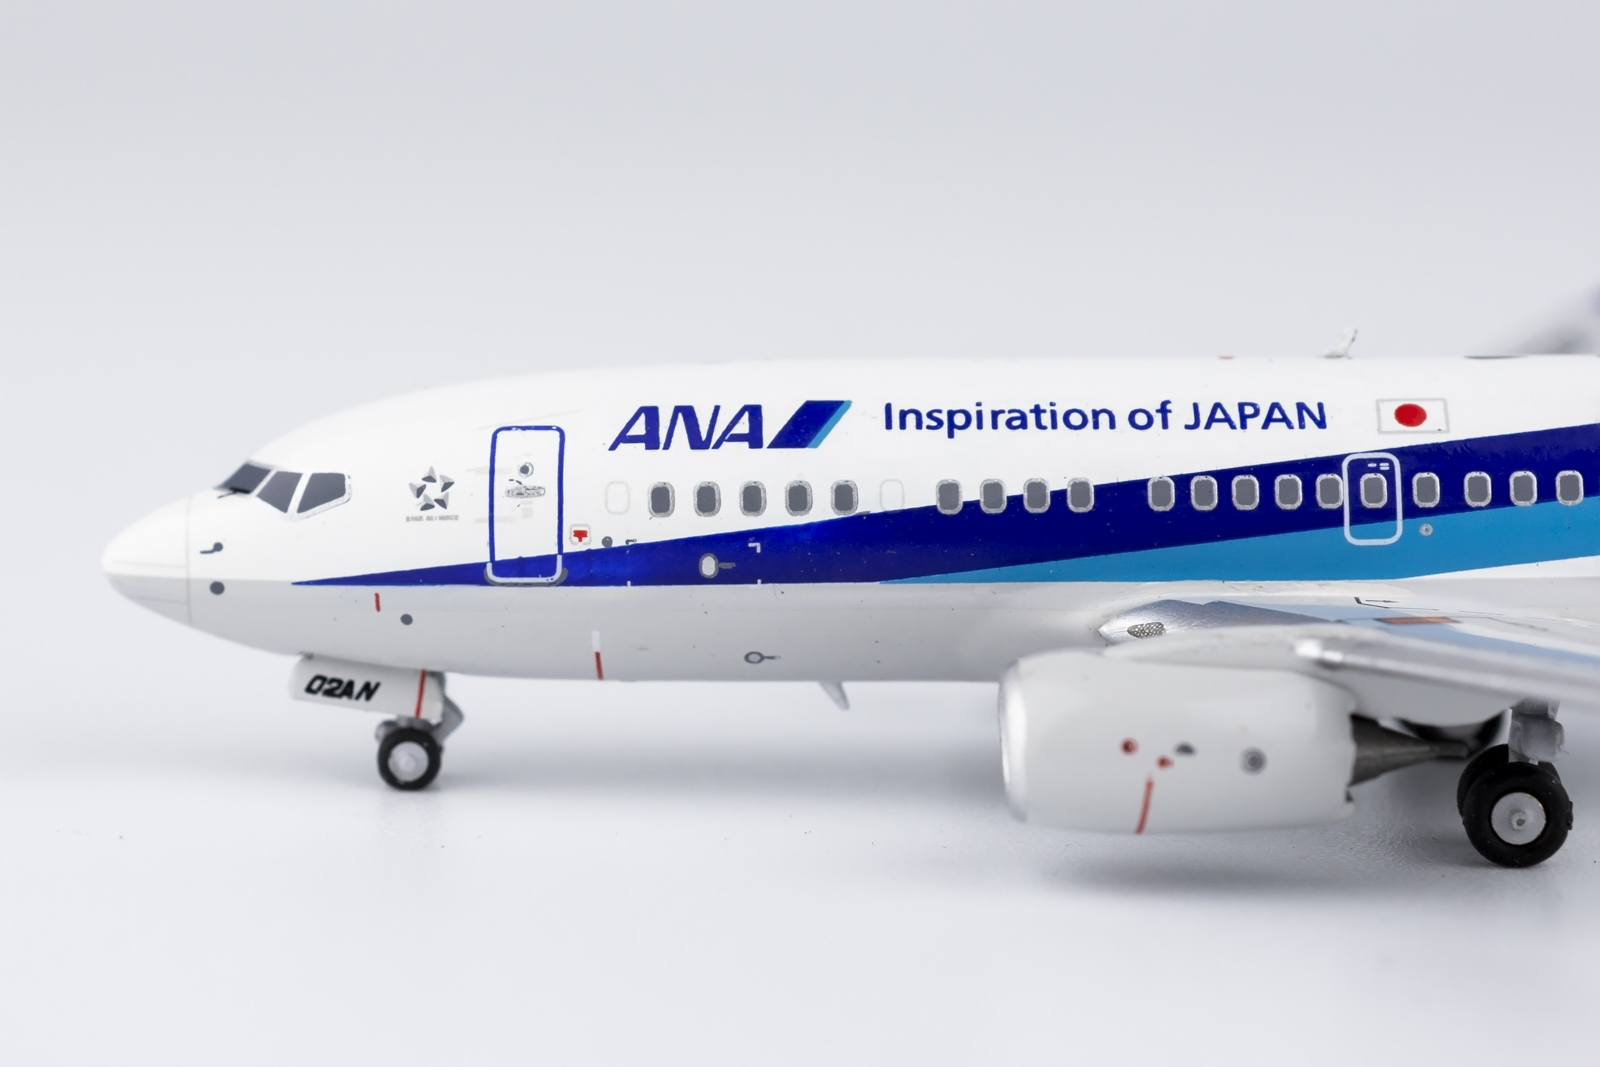 ANA All Nippon Airways Boeing 737-700